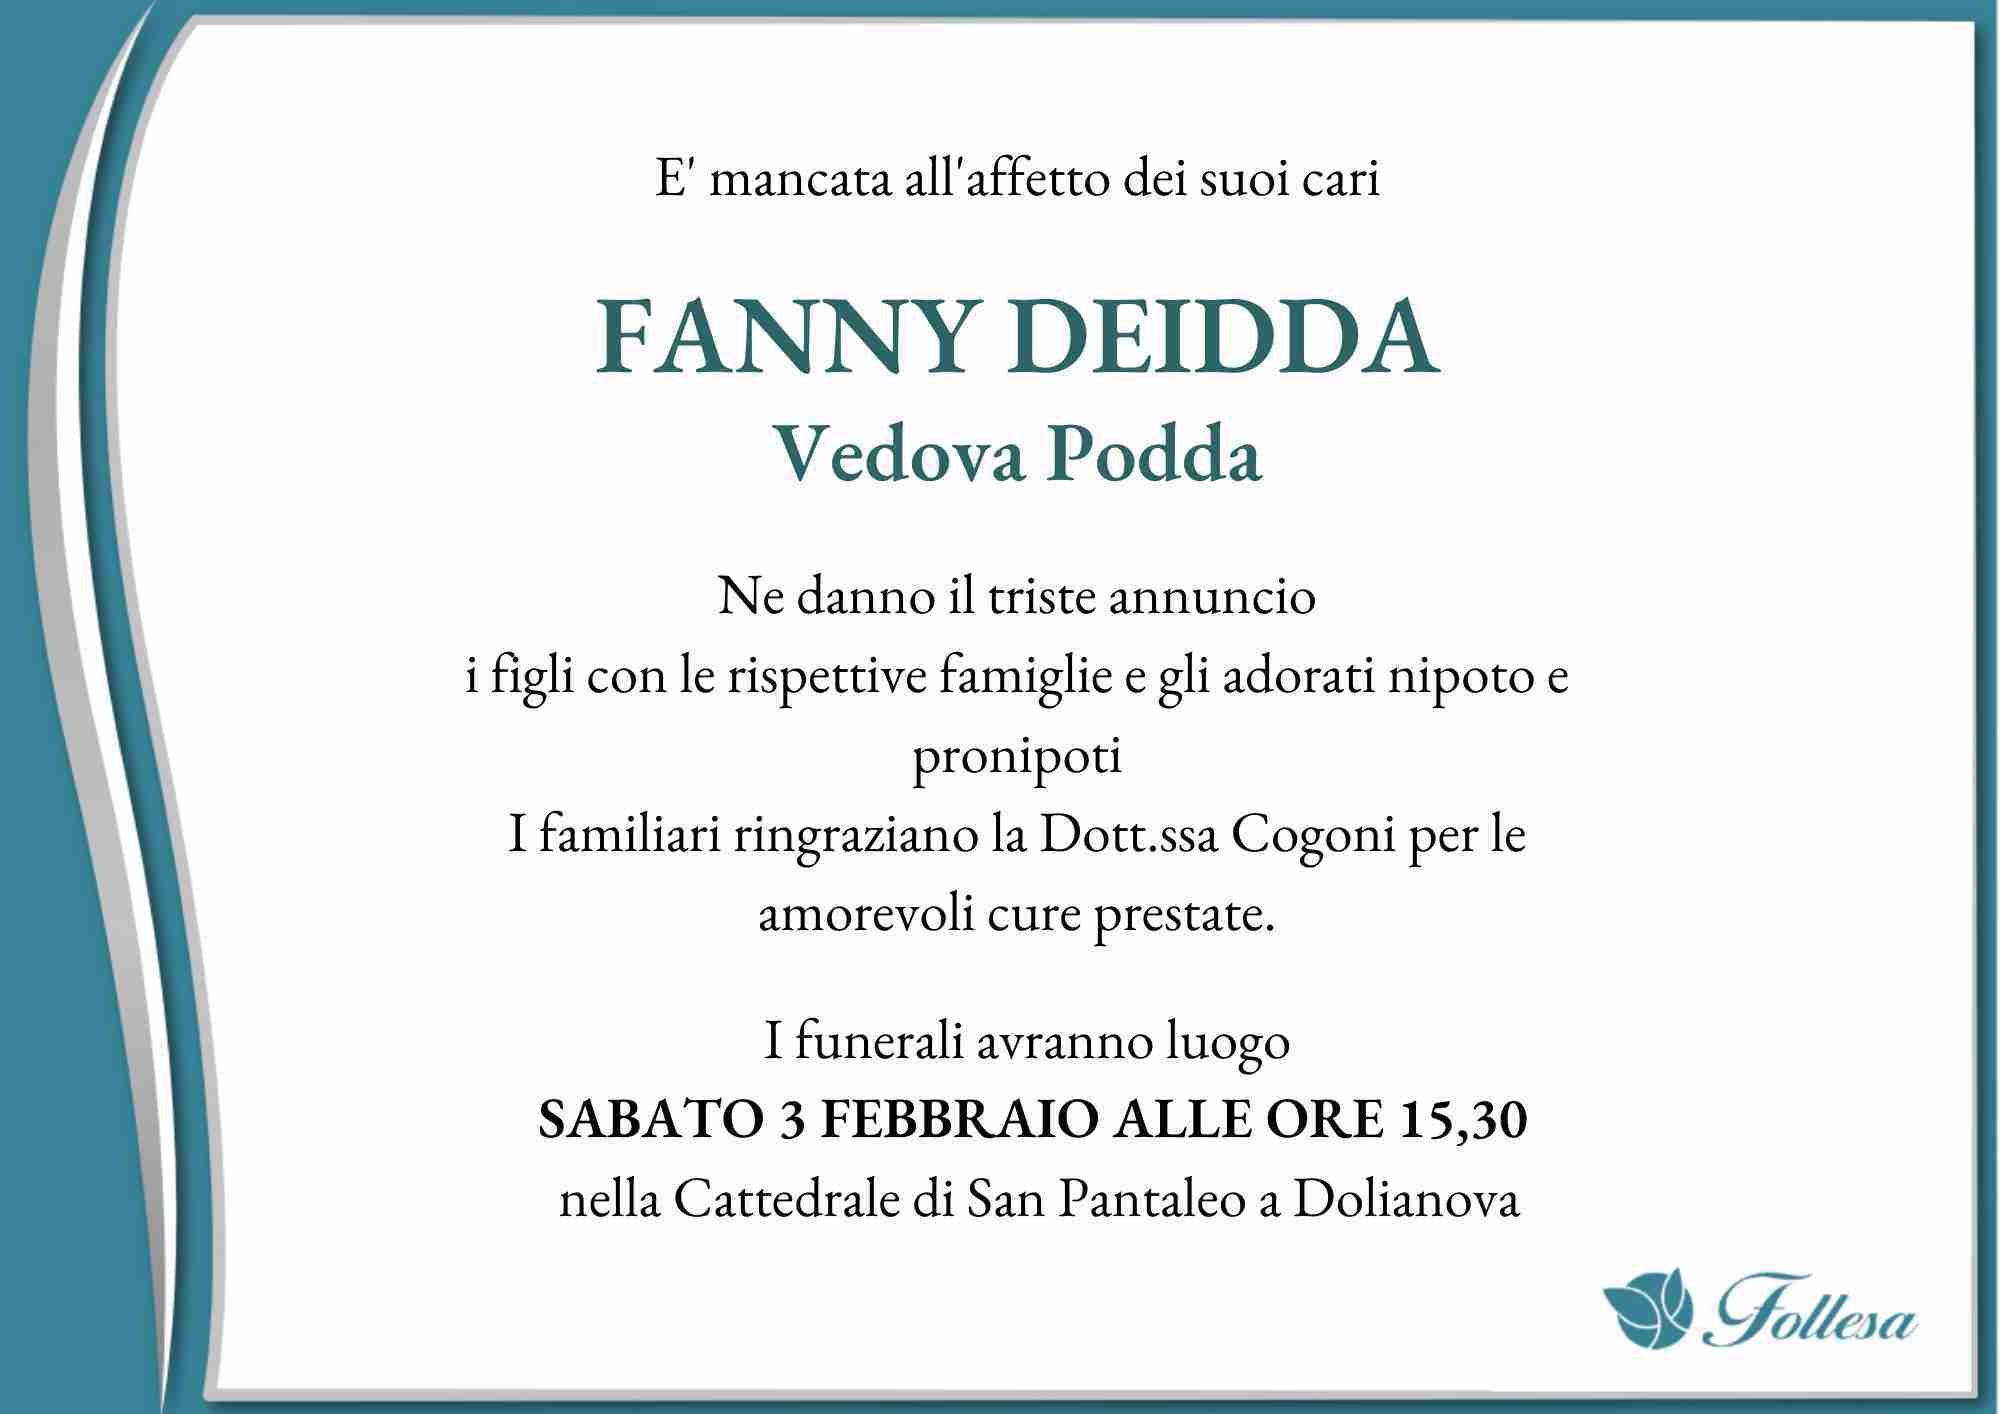 Fanny Deidda